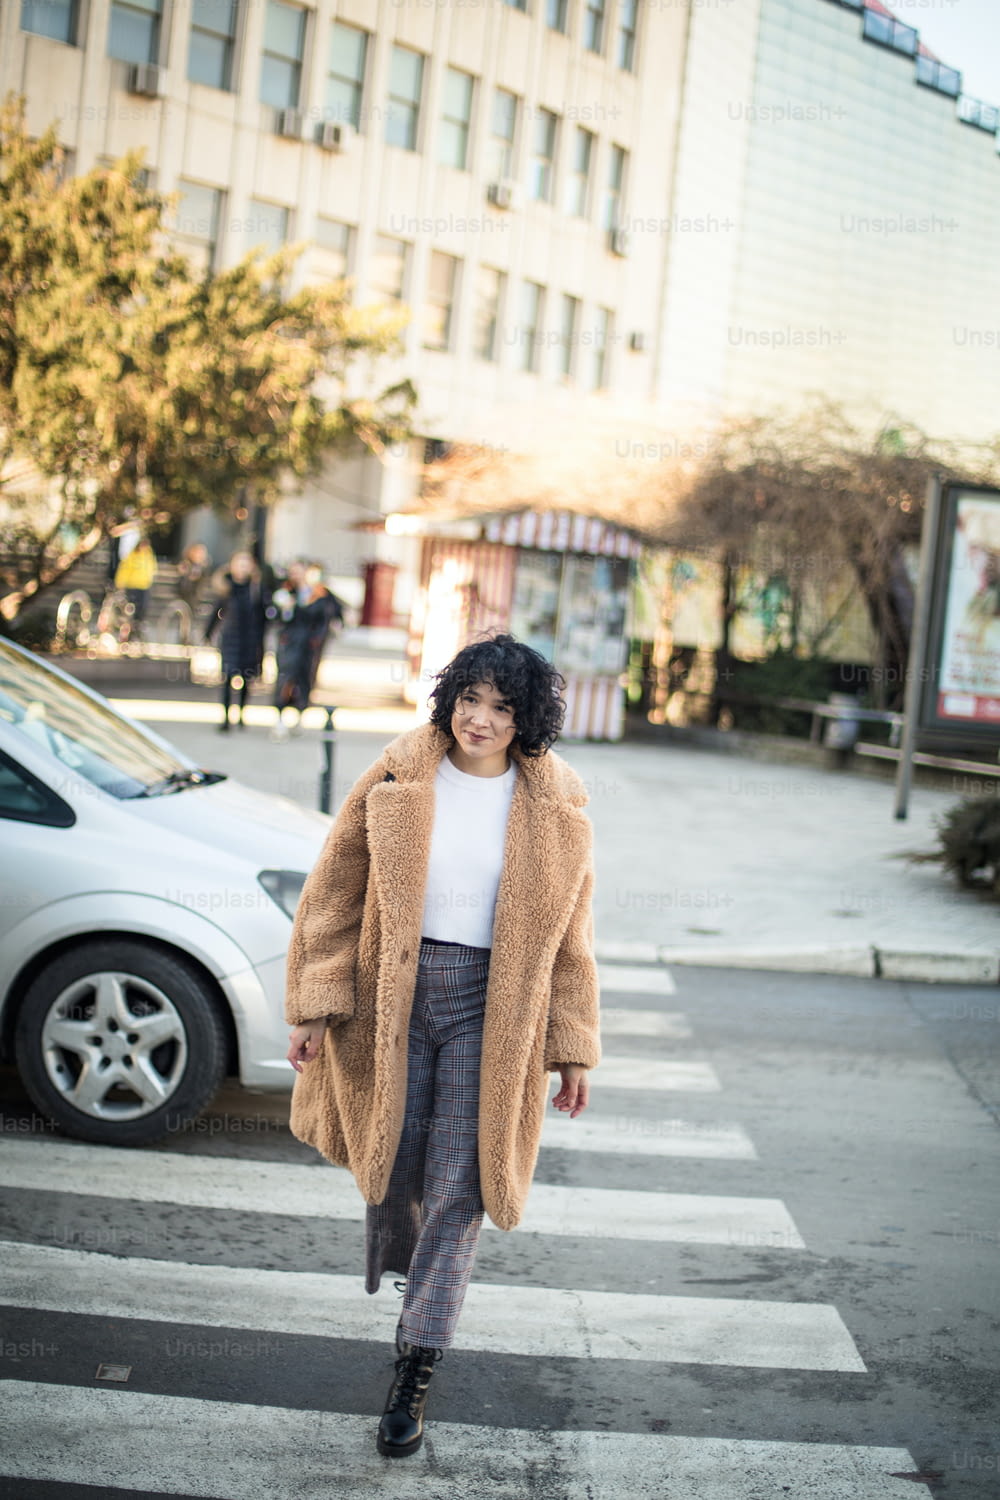 Mujer sonriente cruzando la calle.